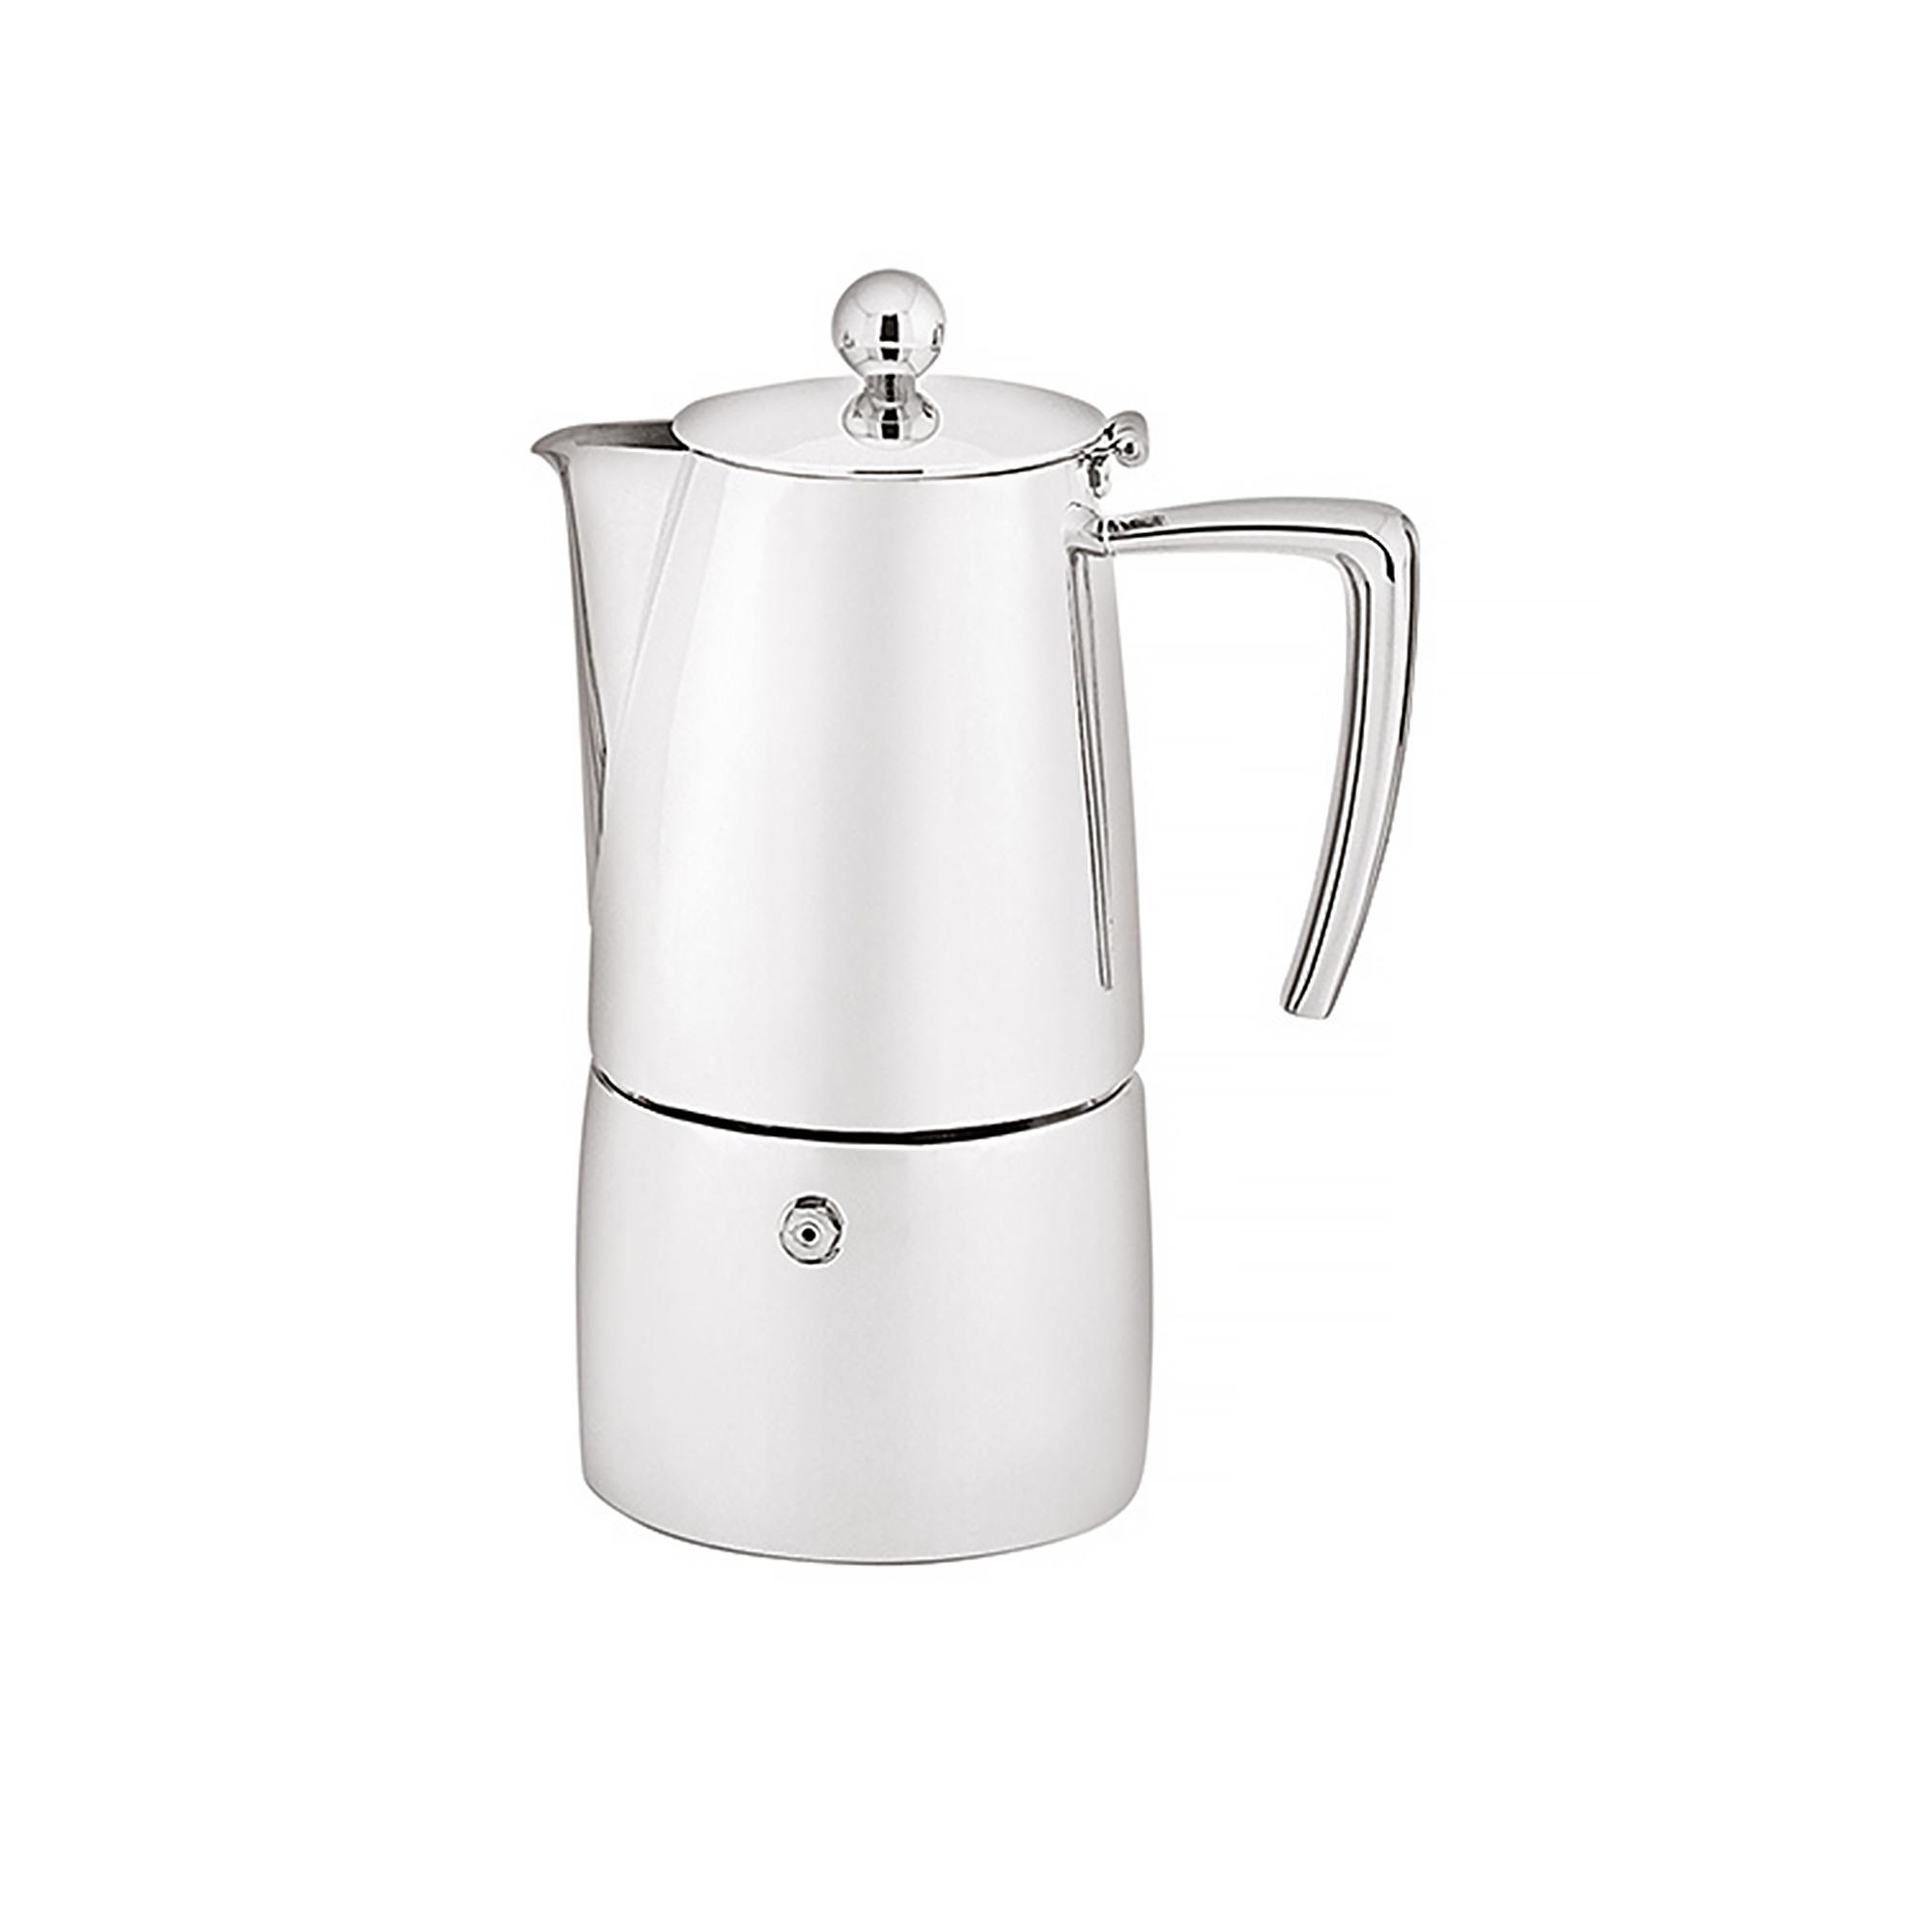 Avanti Art Deco Espresso Maker 4 Cup Image 1